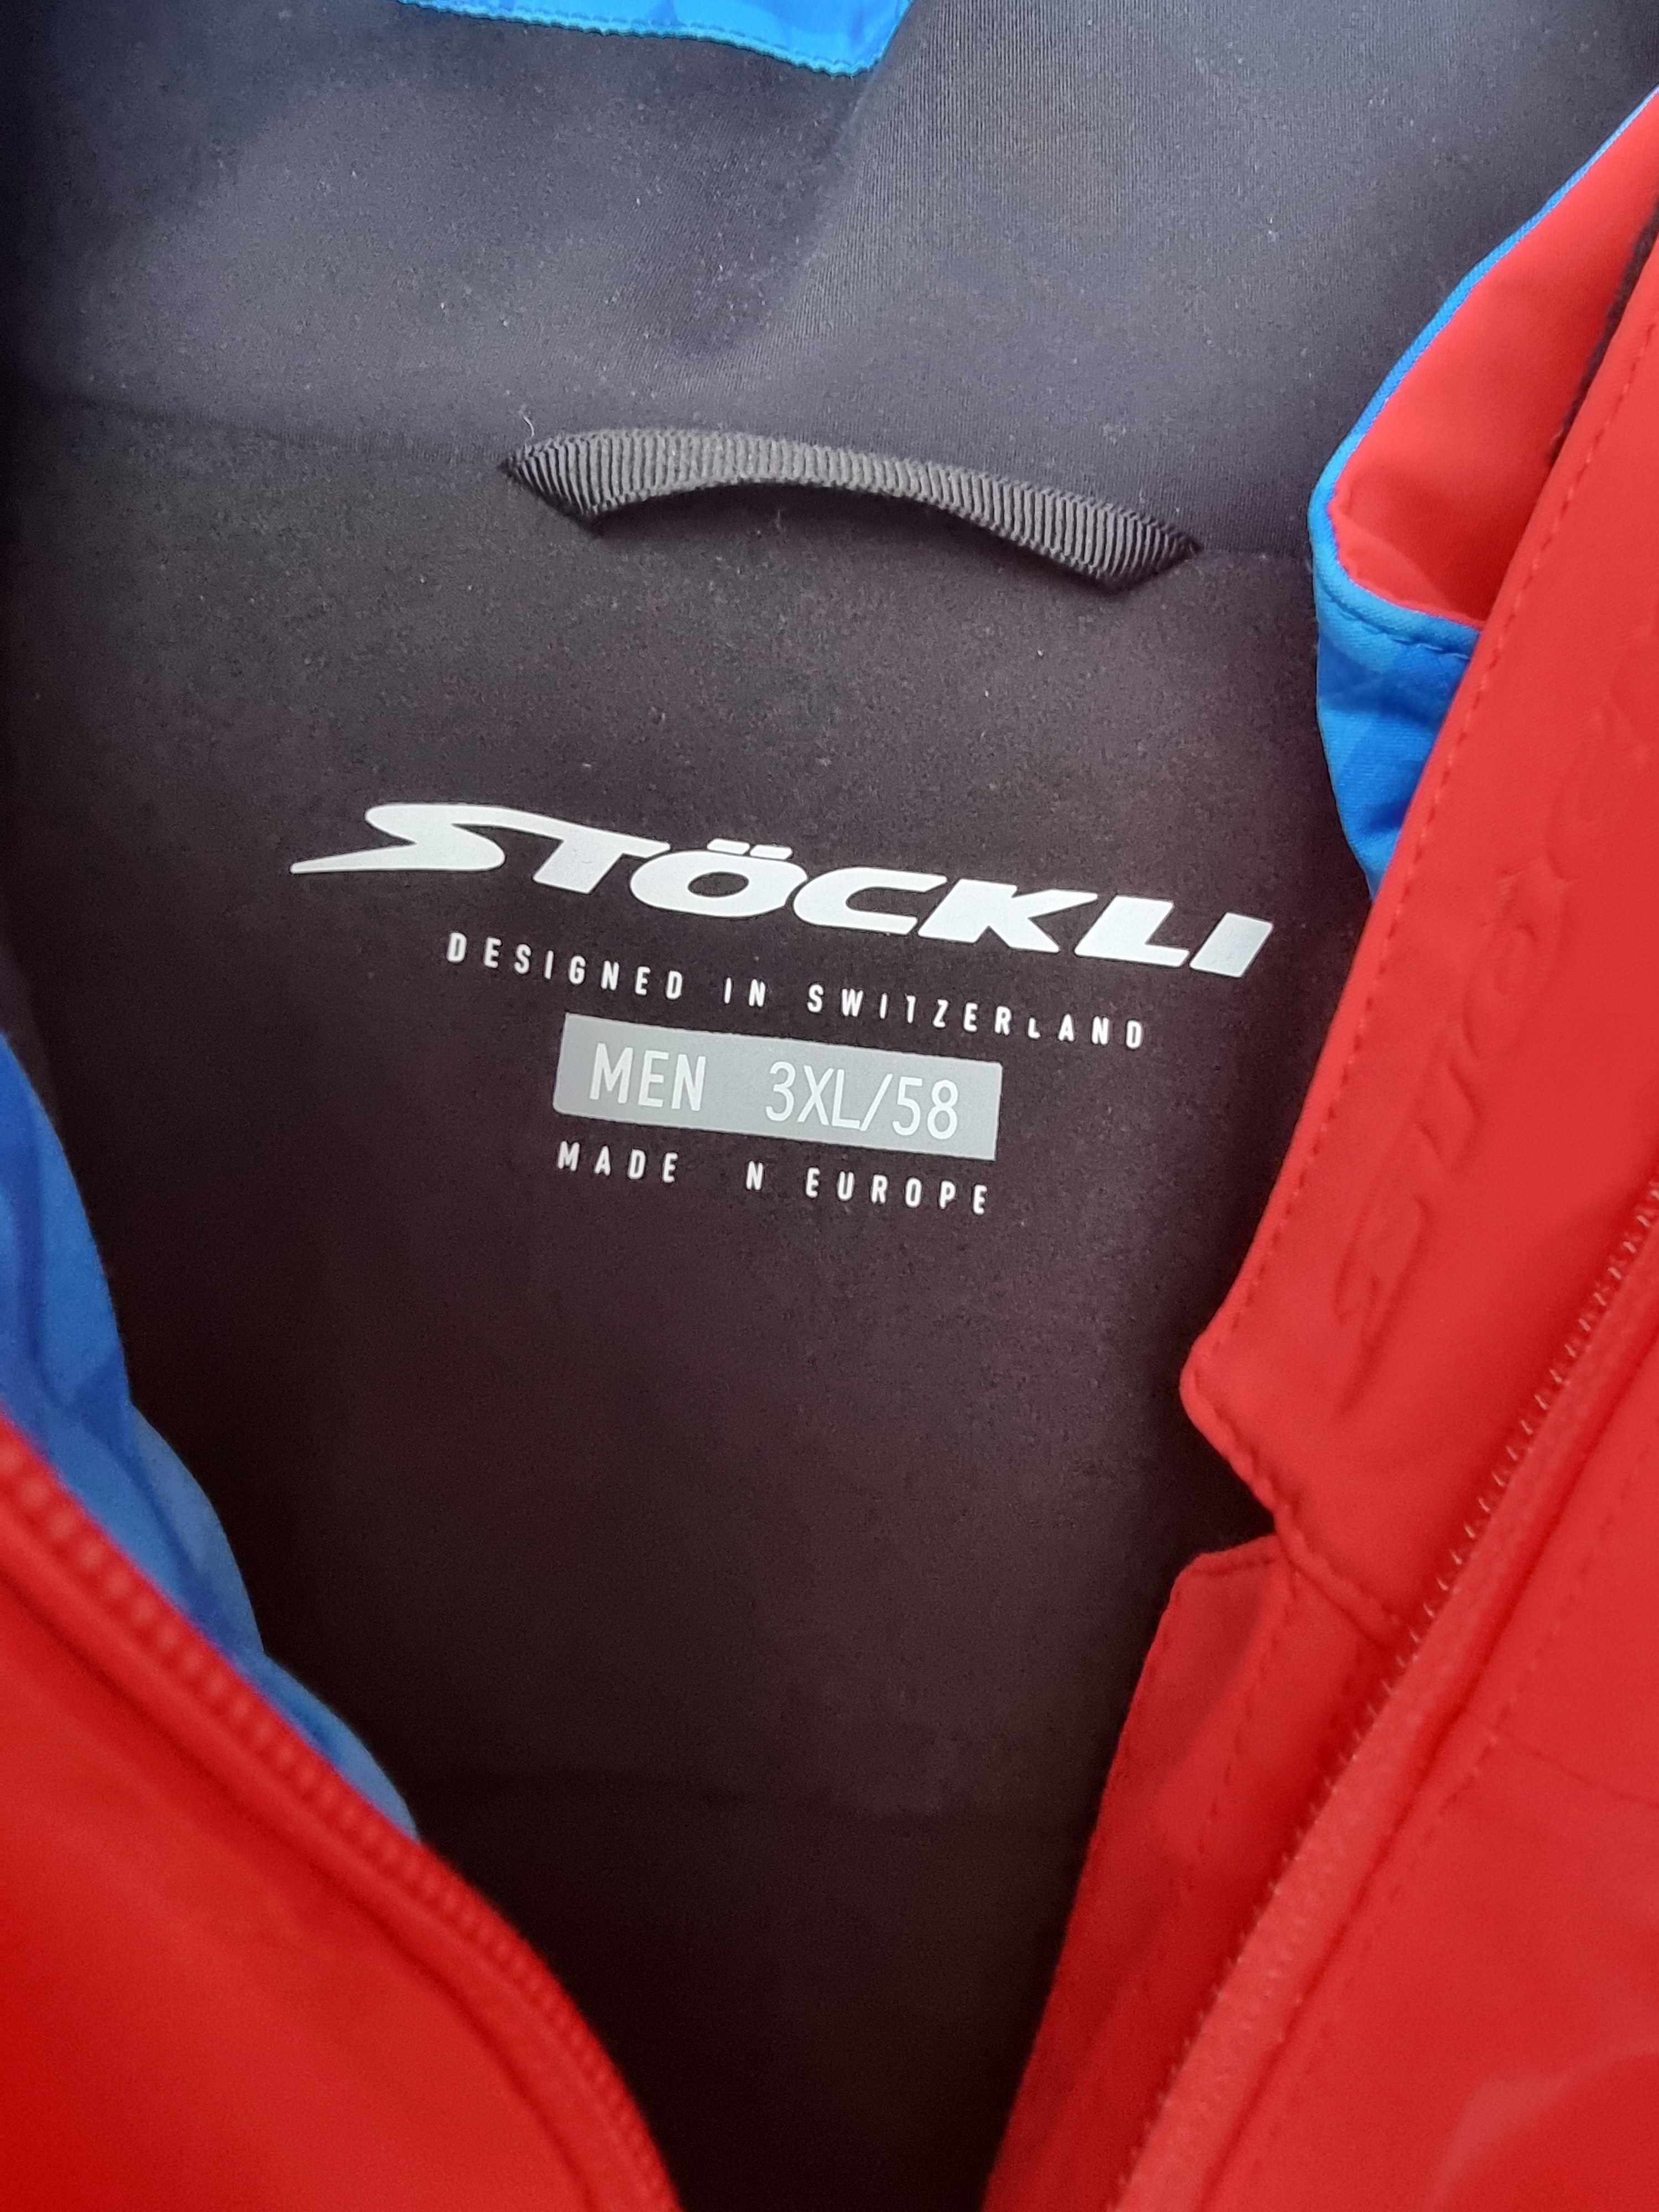 Kurtka narciarska STOCKLI 3Xl 56 profesjonalna